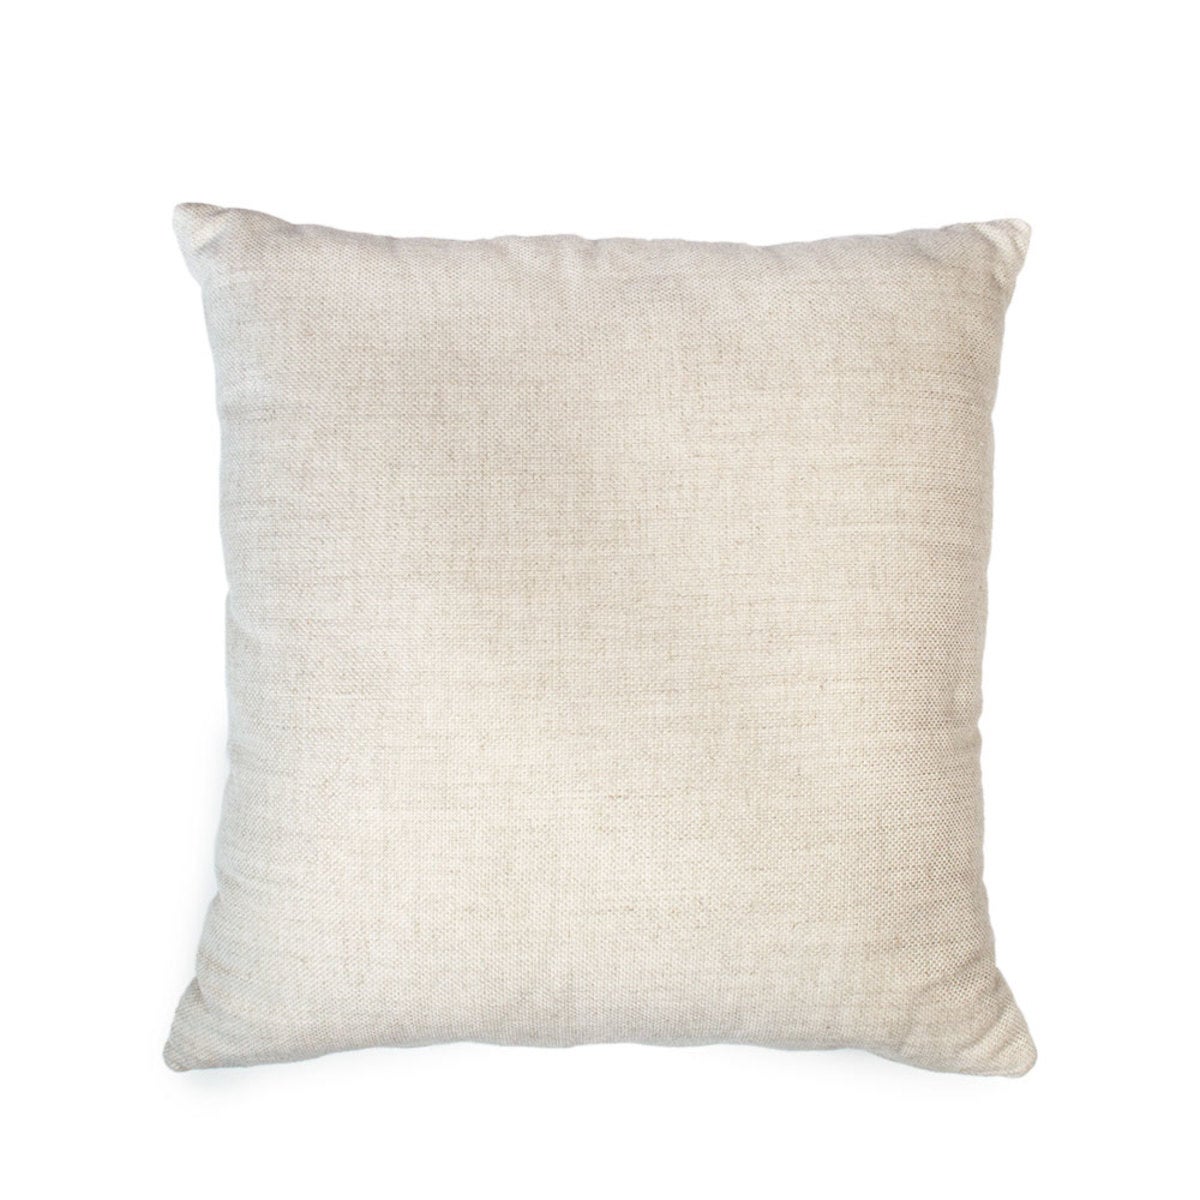 100% Pure Linen Pillow Cover 16" Square - Coal